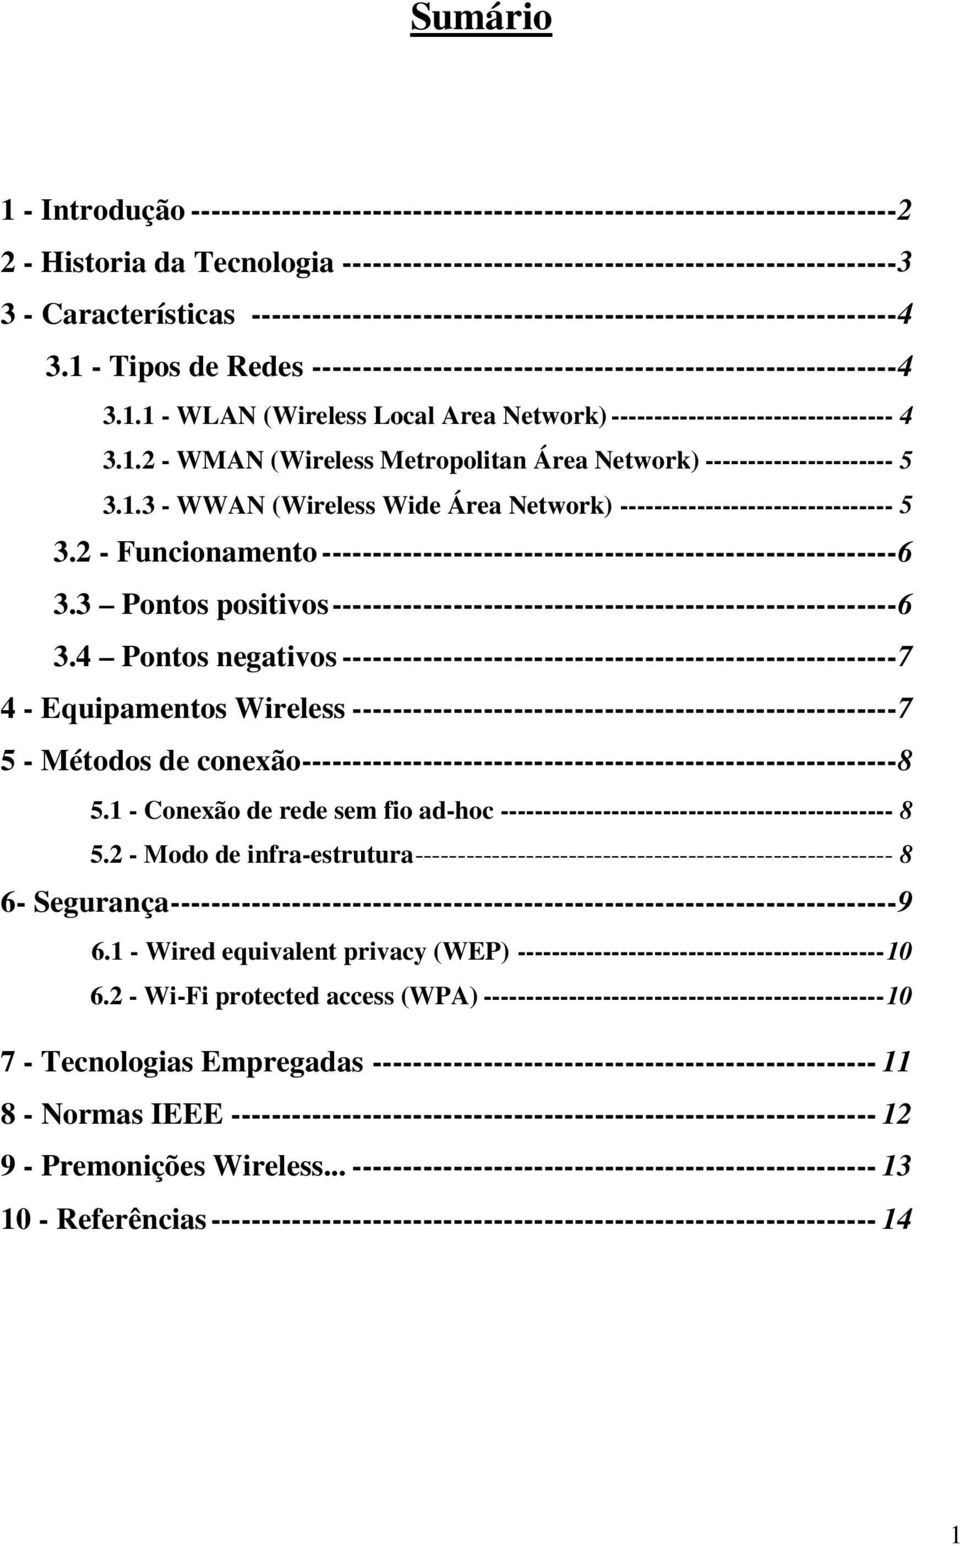 1.2 - WMAN (Wireless Metropolitan Área Network) ---------------------- 5 3.1.3 - WWAN (Wireless Wide Área Network) -------------------------------- 5 3.